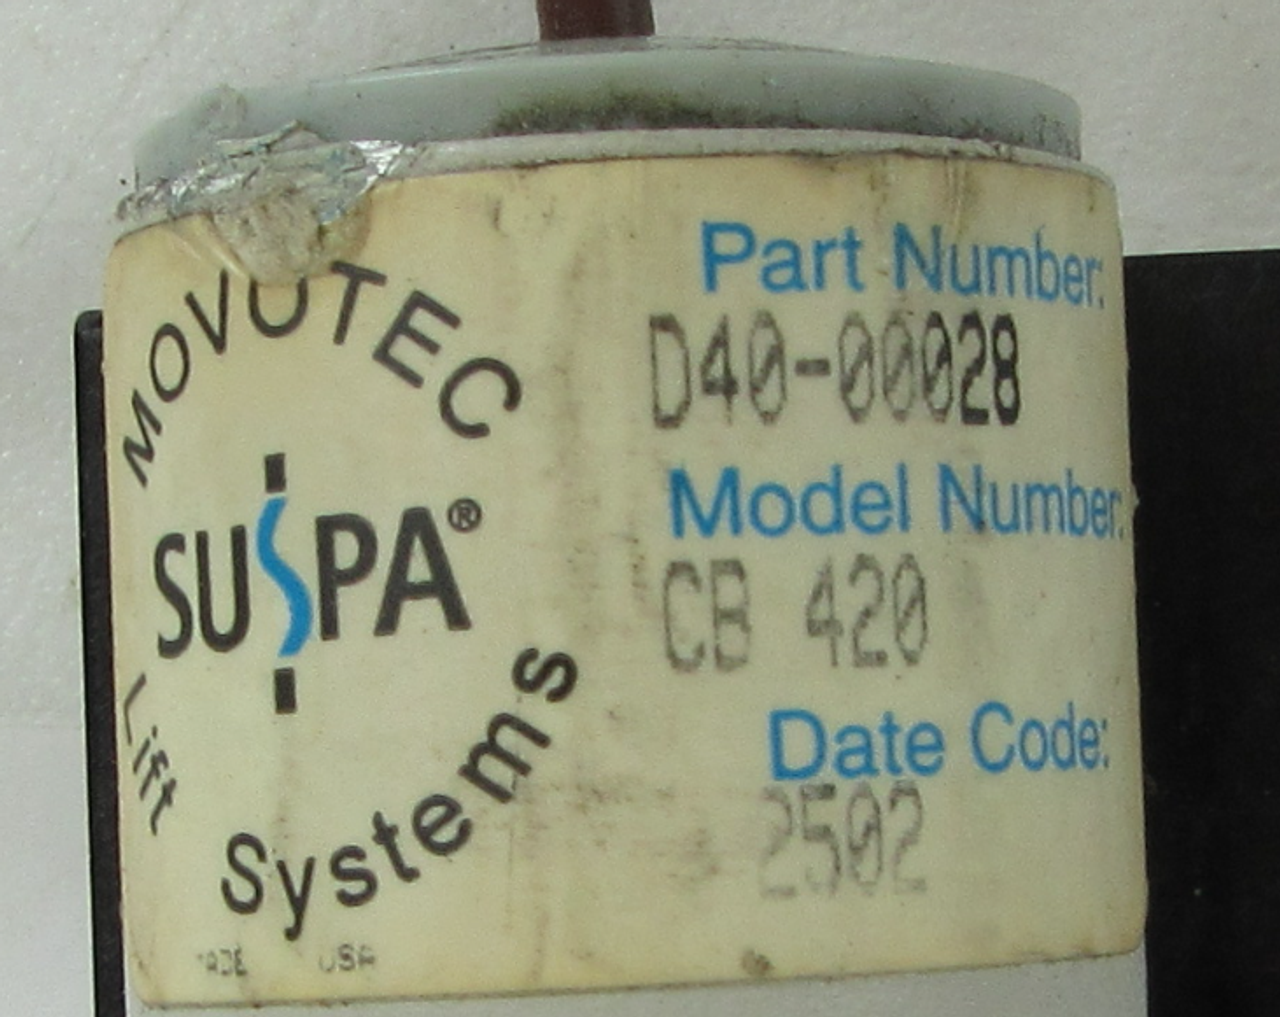 Movotec Suspa Lift Systems D40-00028 13" Leg Lift Cylinder CB 420